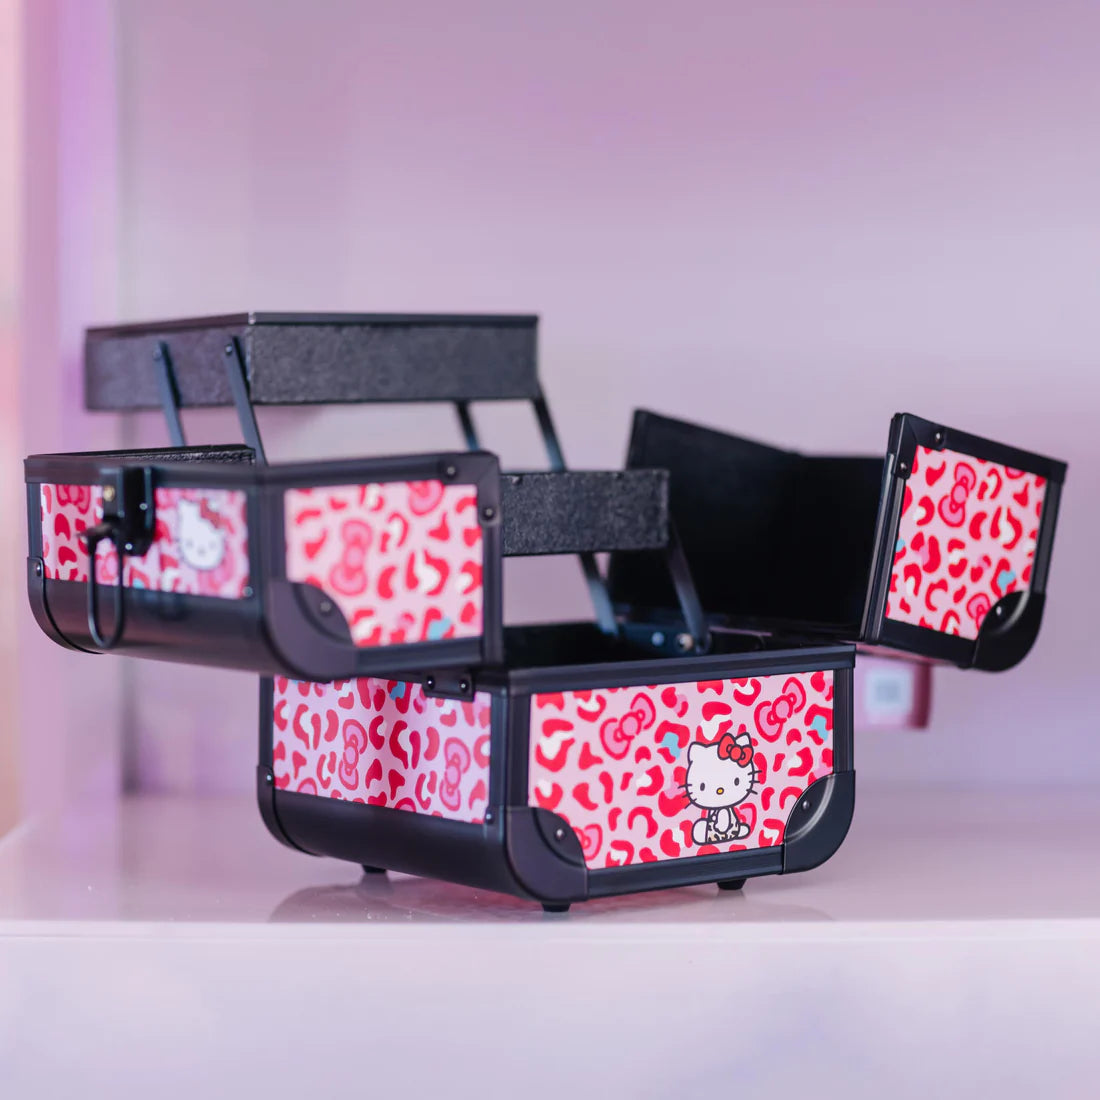 Impressions Vanity - Hello Kitty SlayCube Makeup Travel Case Pink Animal